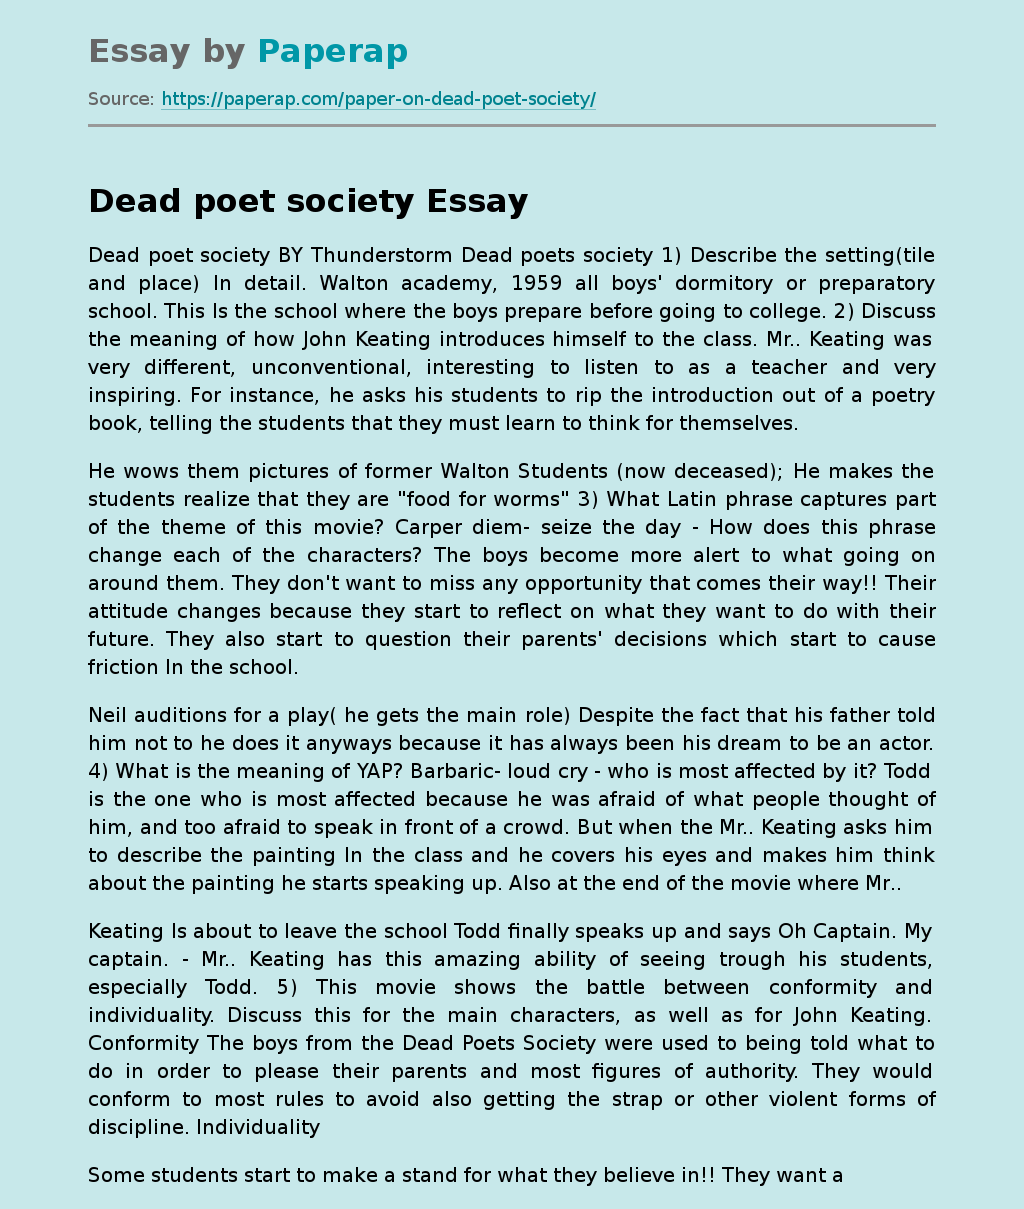 Dead poet society